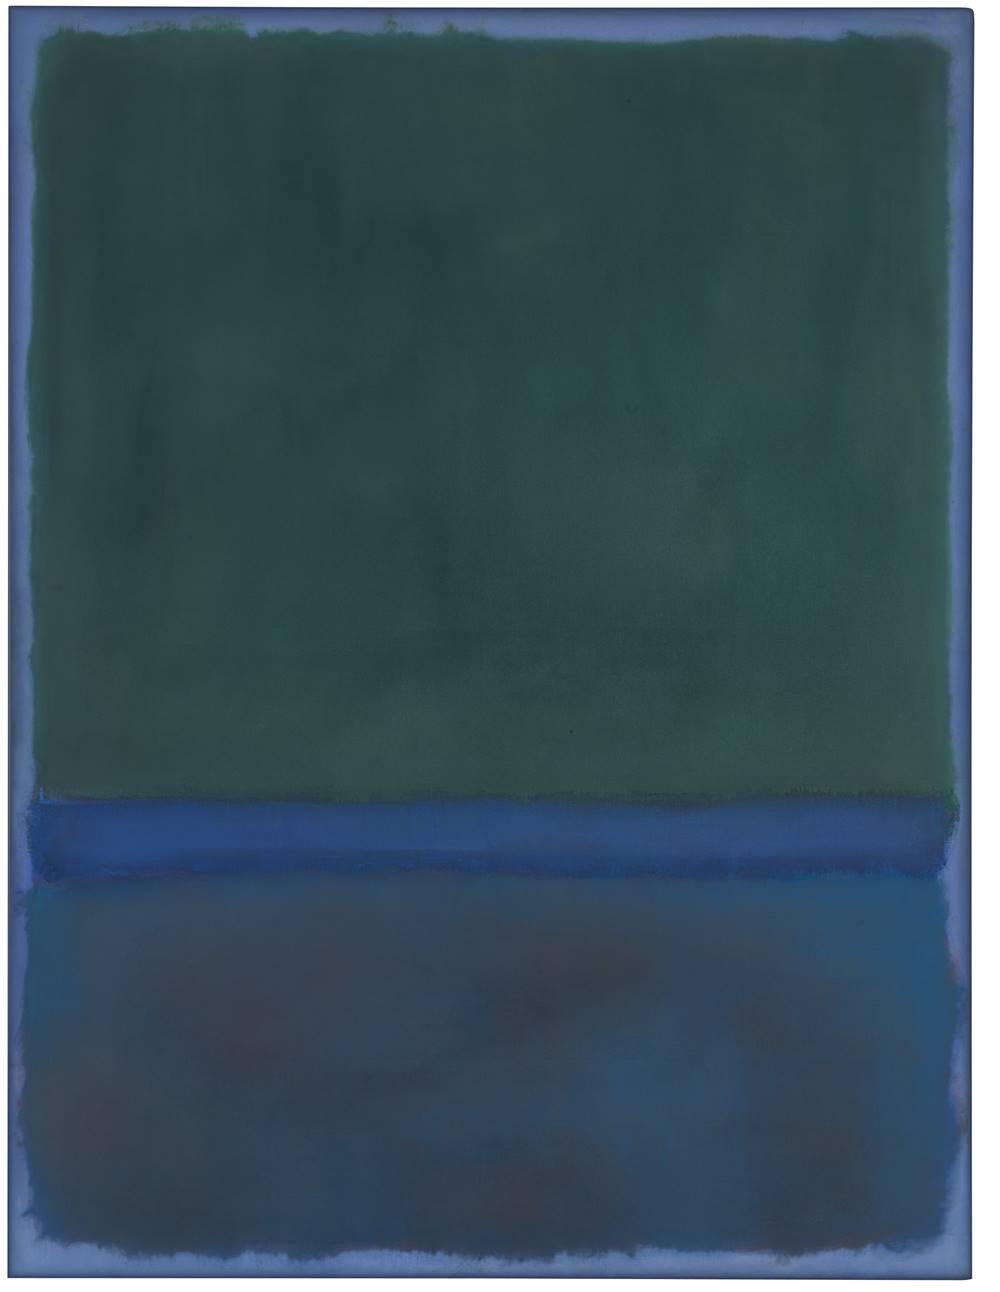 Mark Rothko, No. 17 (1957). Image: Courtesy of Christie's.